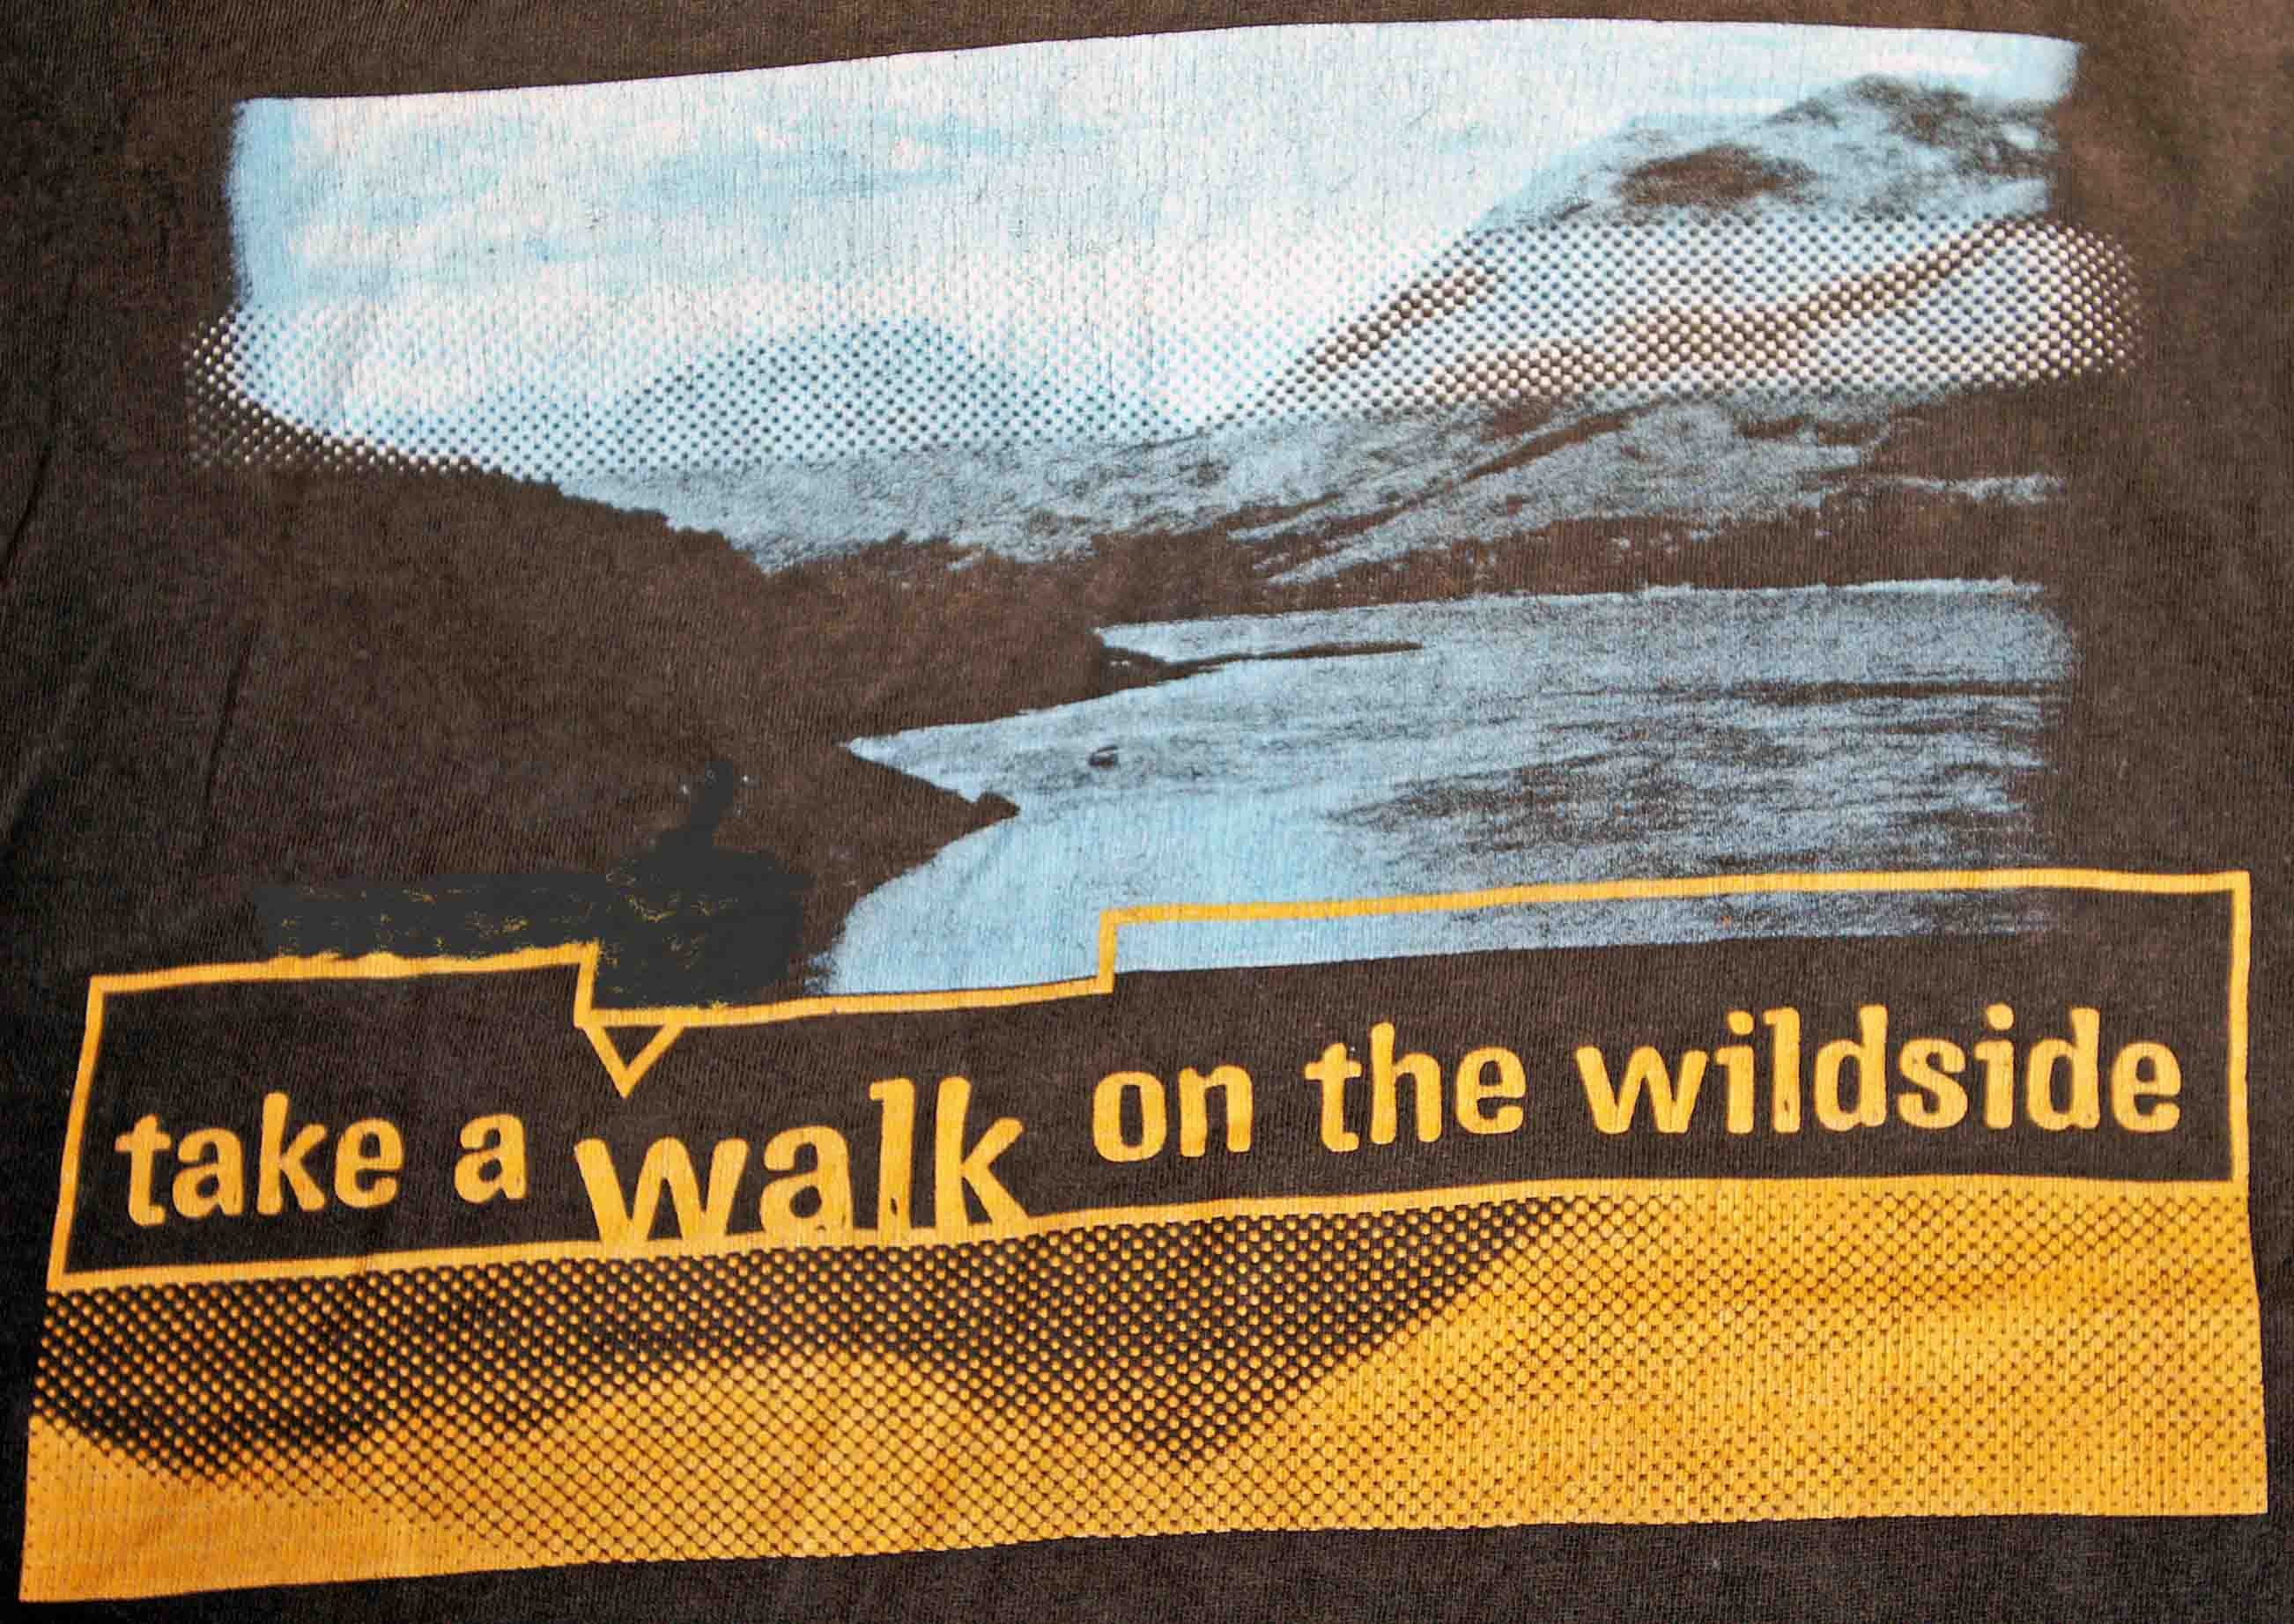 http://take-a-walk-on-the-wildside.de/wp-content/uploads/2014/09/4.jpg